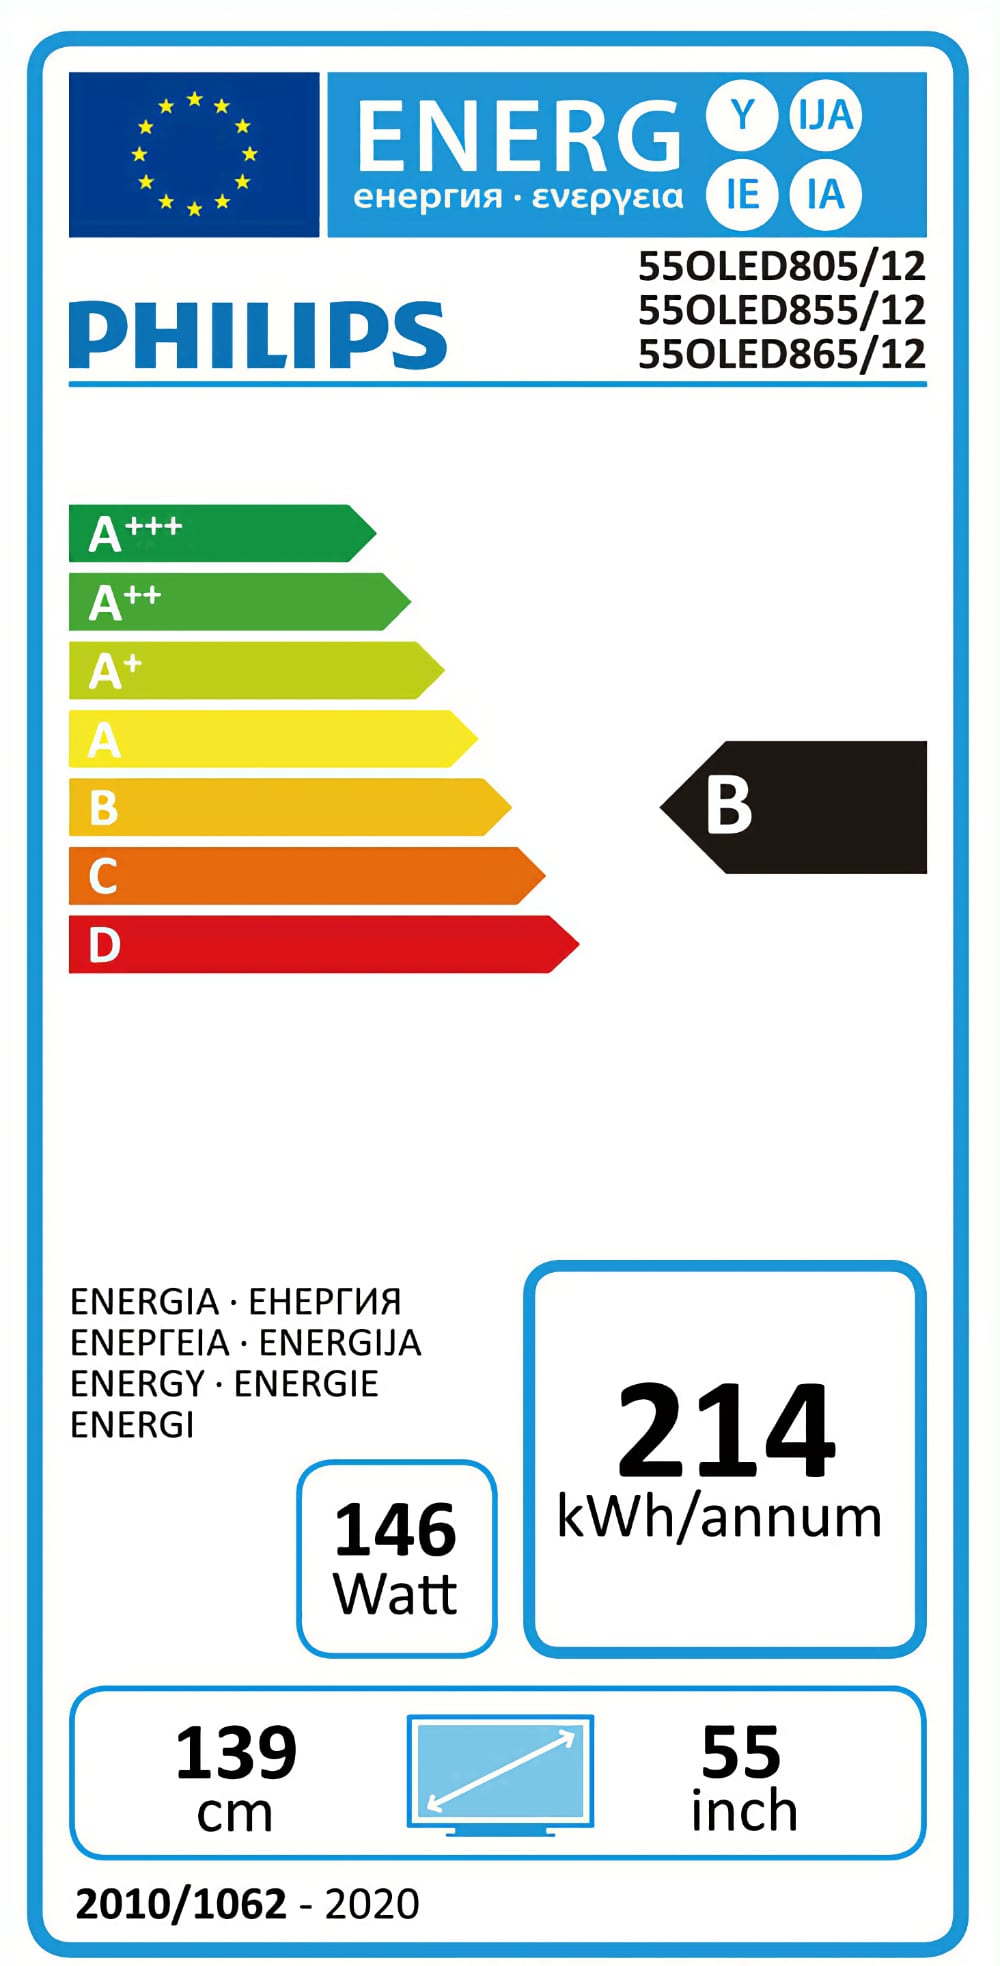 Philips OLED energy consumption